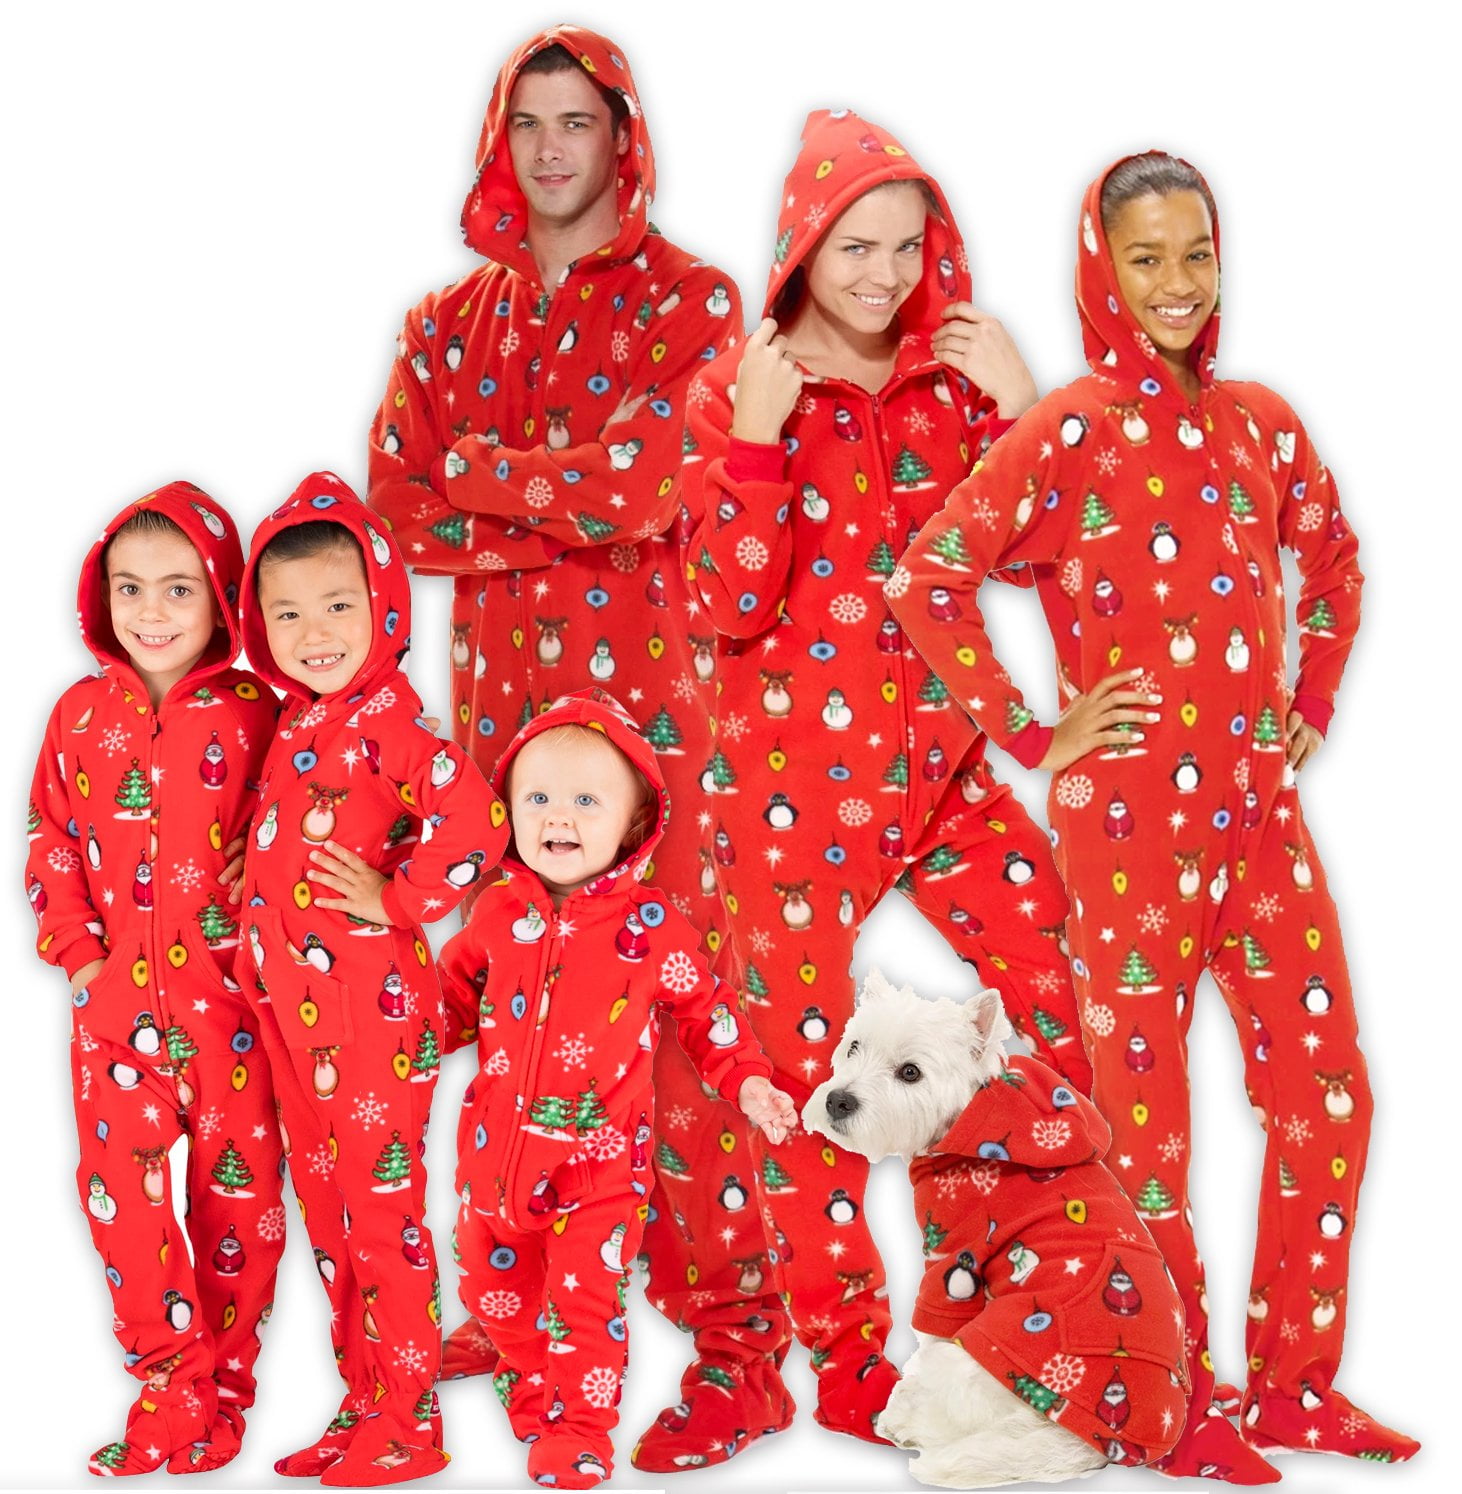 Red, Men Large Christmas Pajamas for Family Family Christmas Onesies Pjs Matching Sleepwear Matching Christmas Pjs for Family 